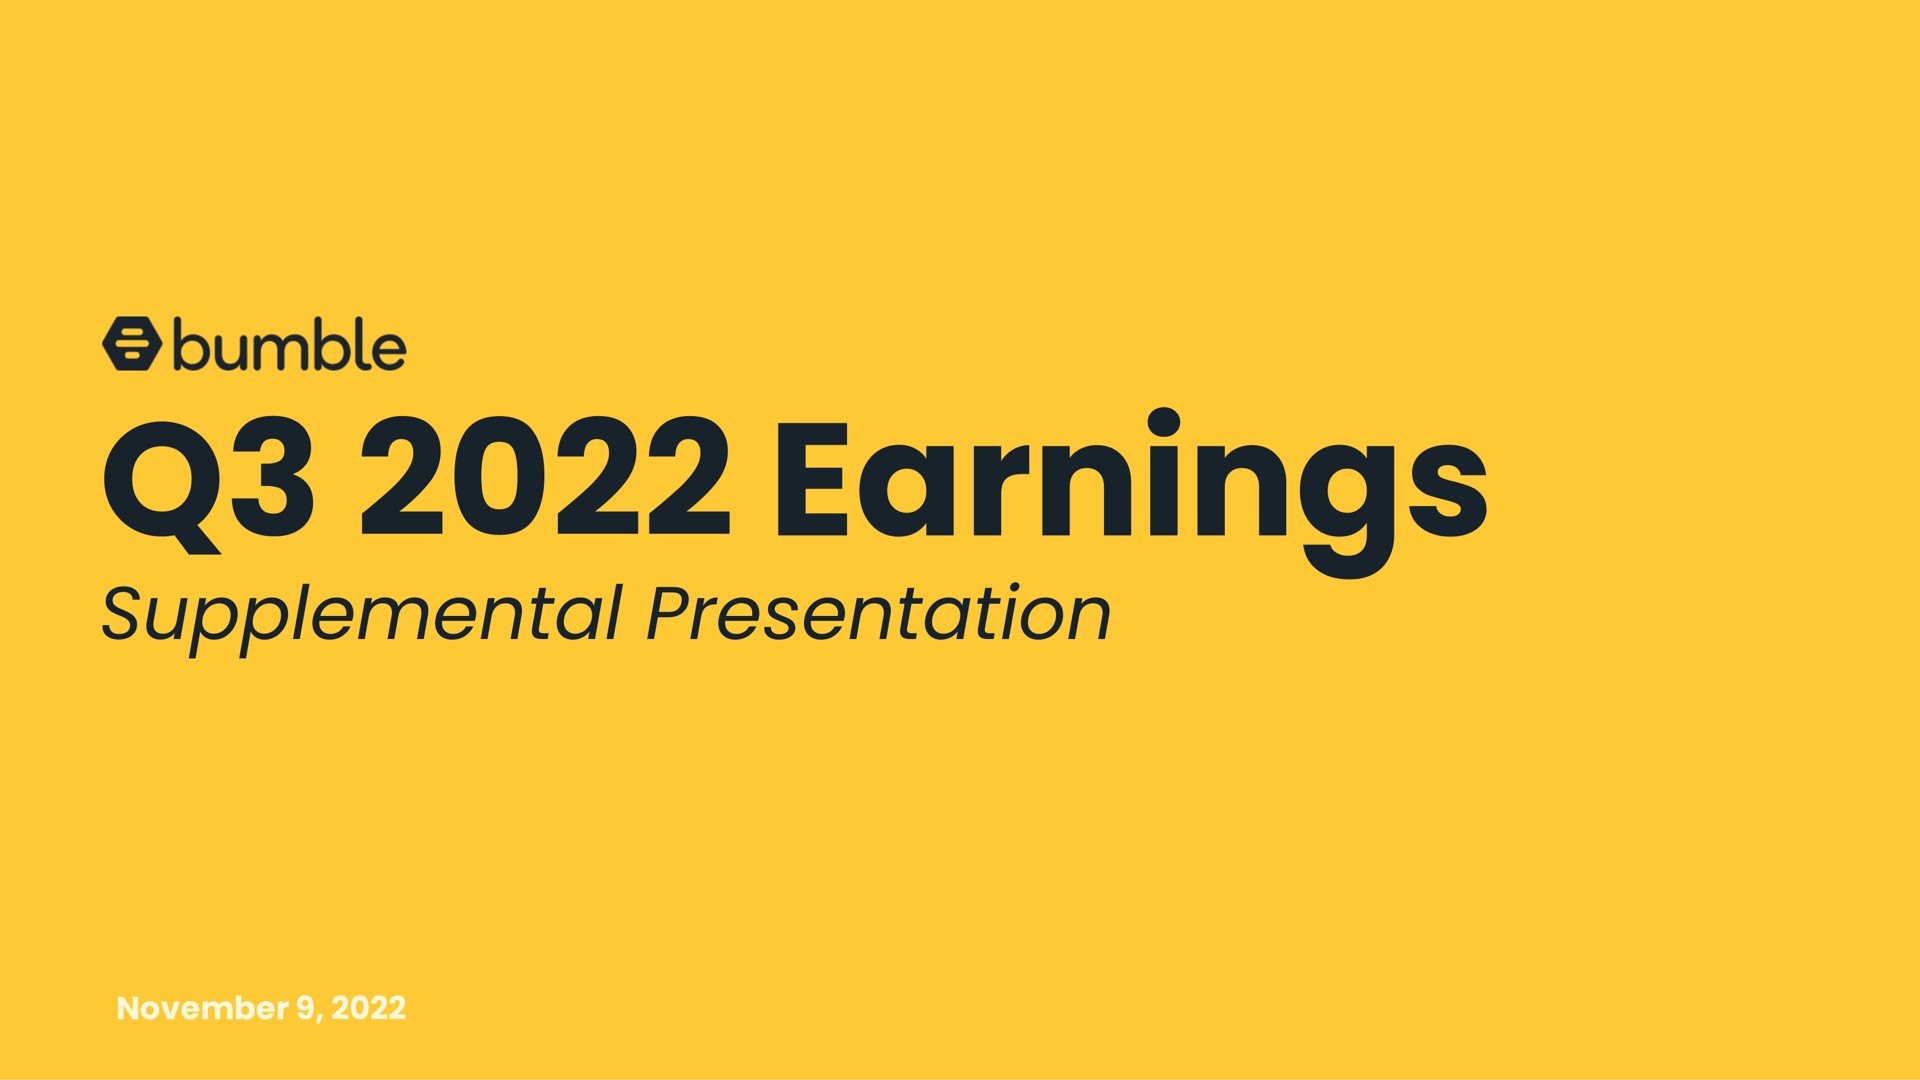 earnings supplemental presentation bumble | Bumble